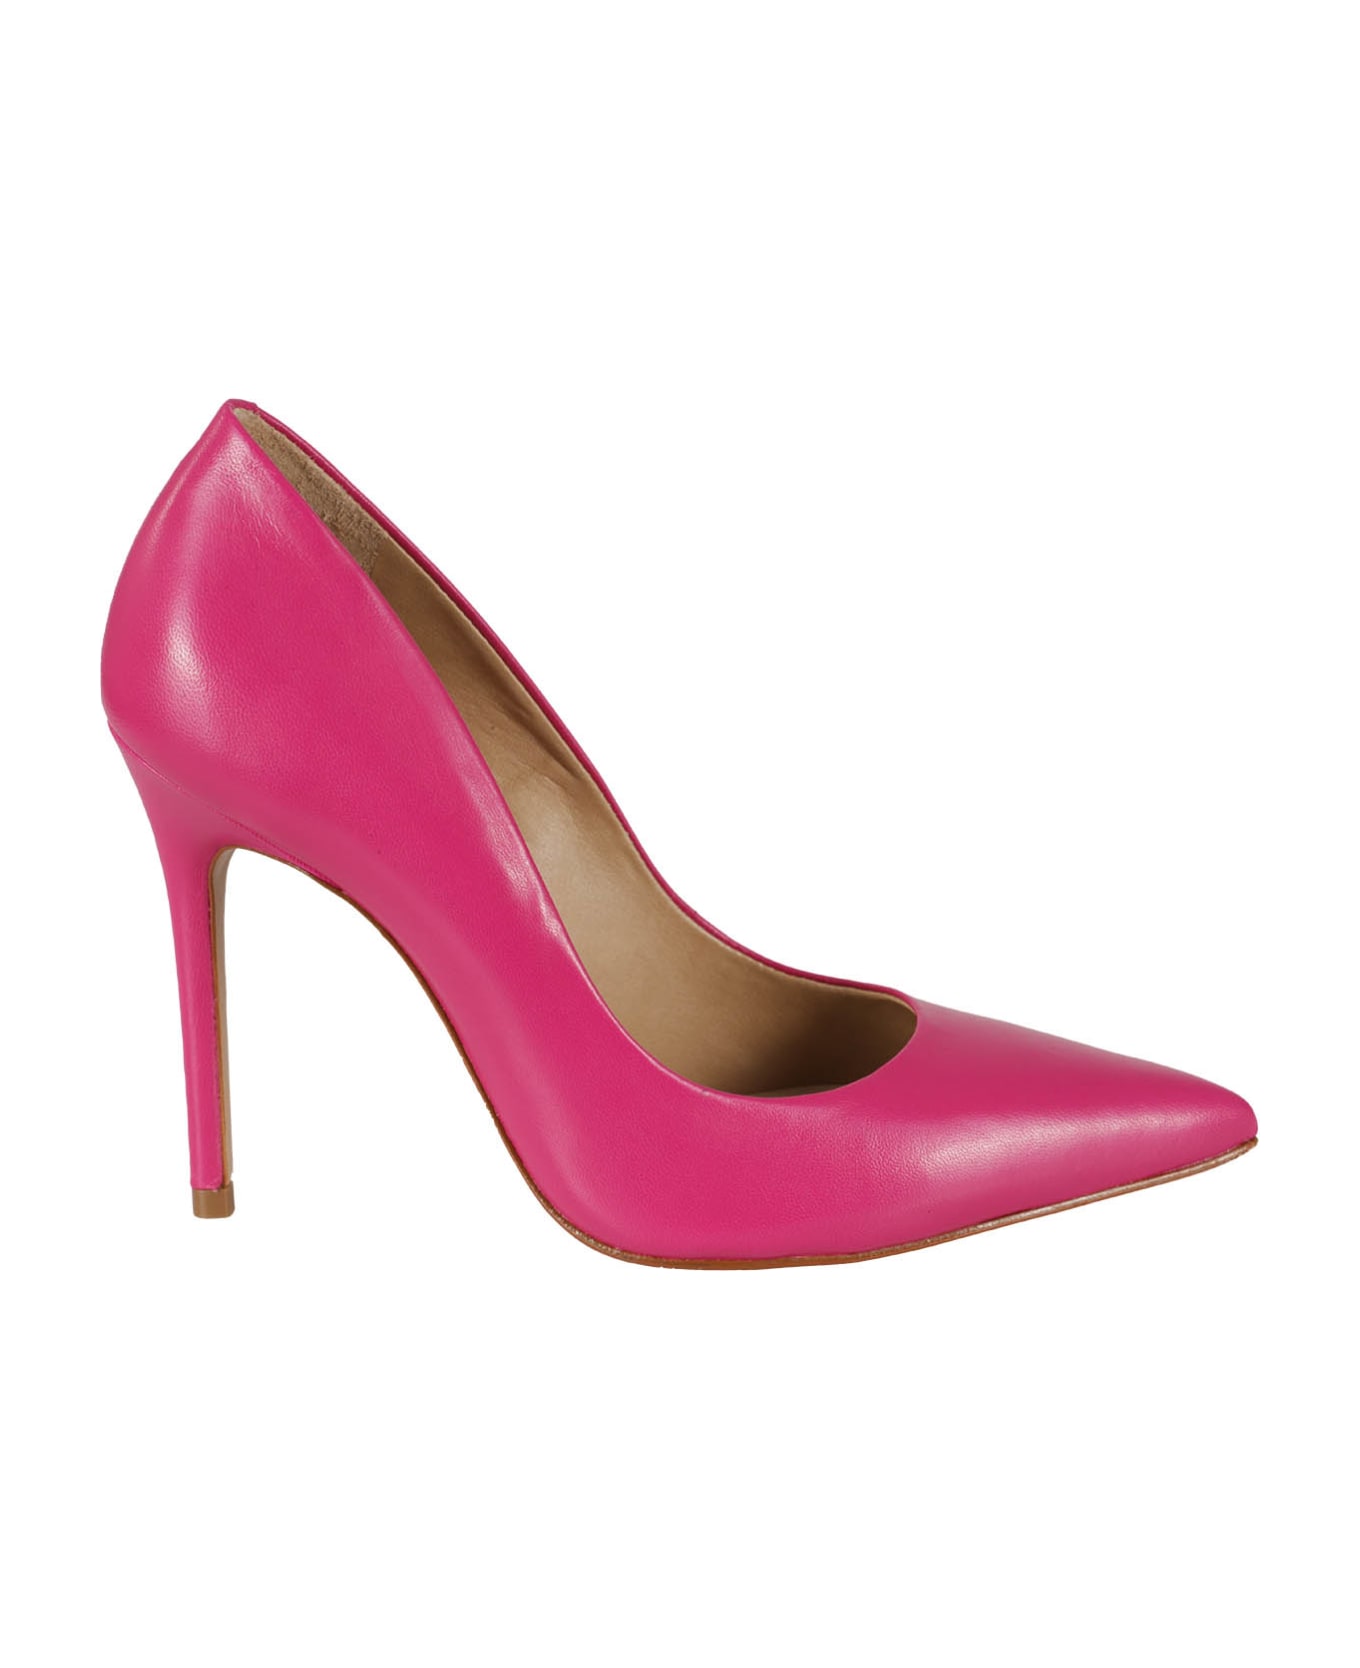 Schutz Shoes - Pink ハイヒール